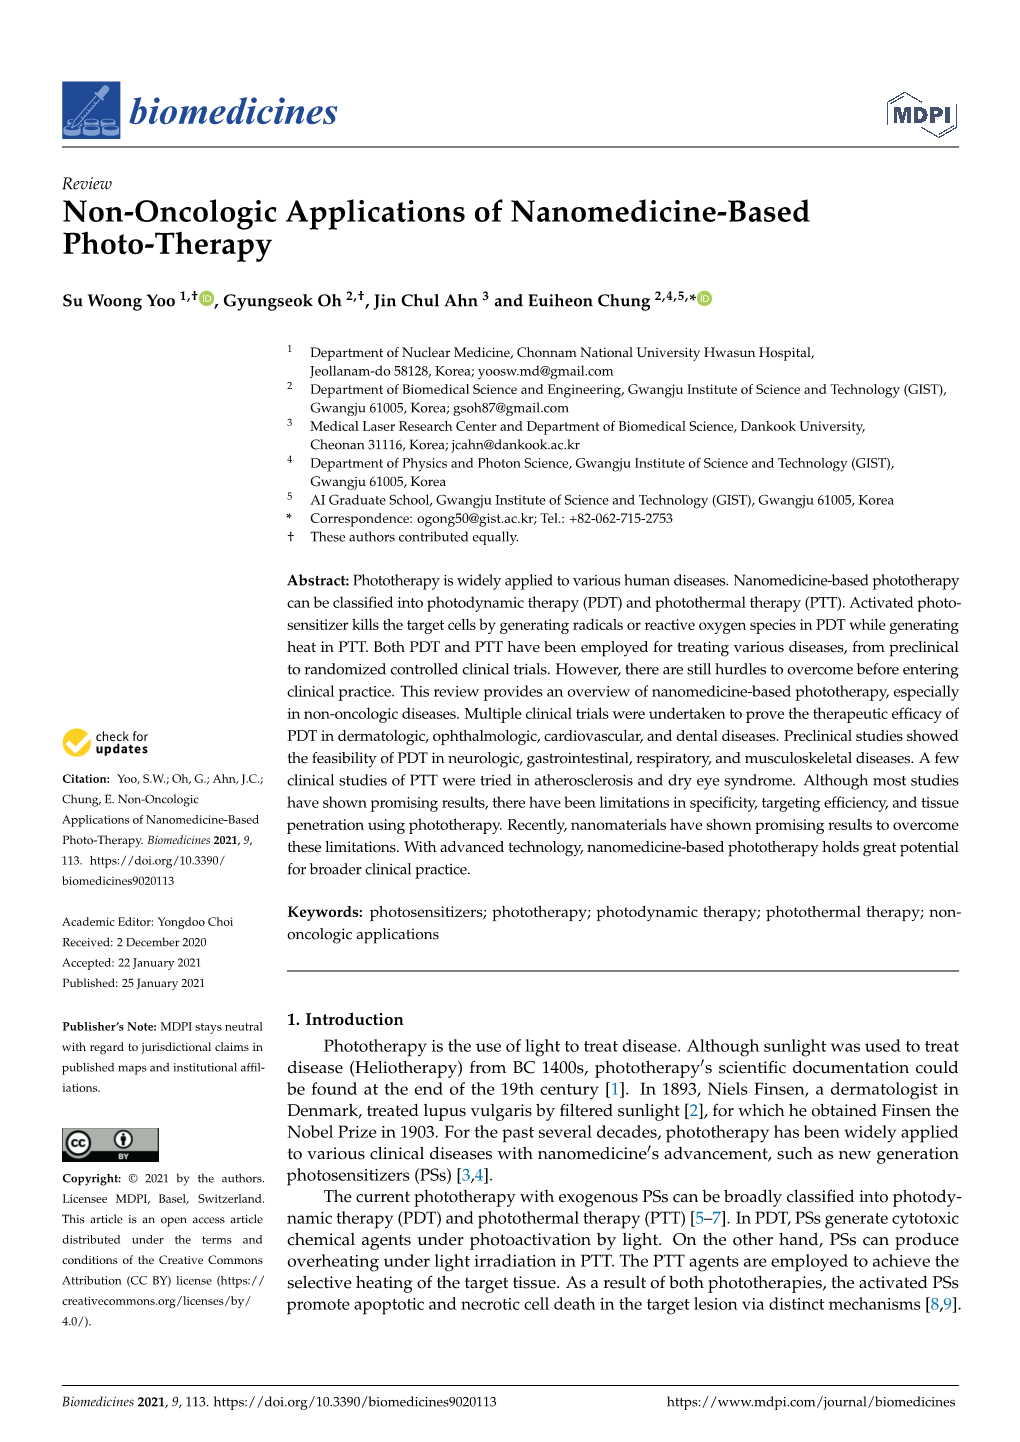 Non-Oncologic Applications of Nanomedicine-Based Photo-Therapy